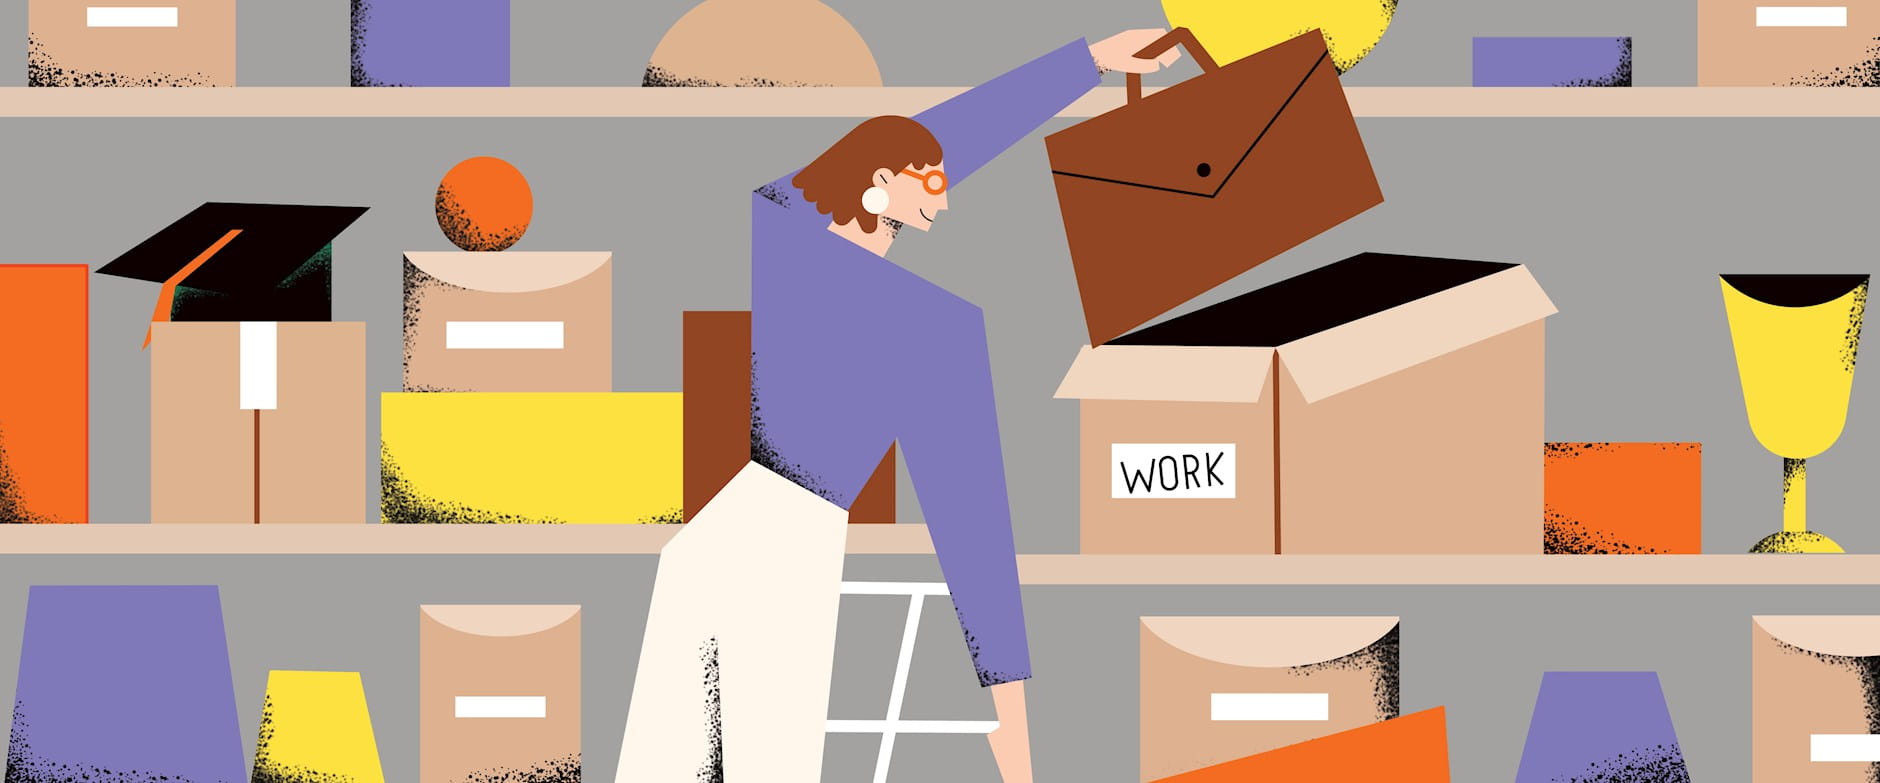 Illustration of woman putting work bag in storage